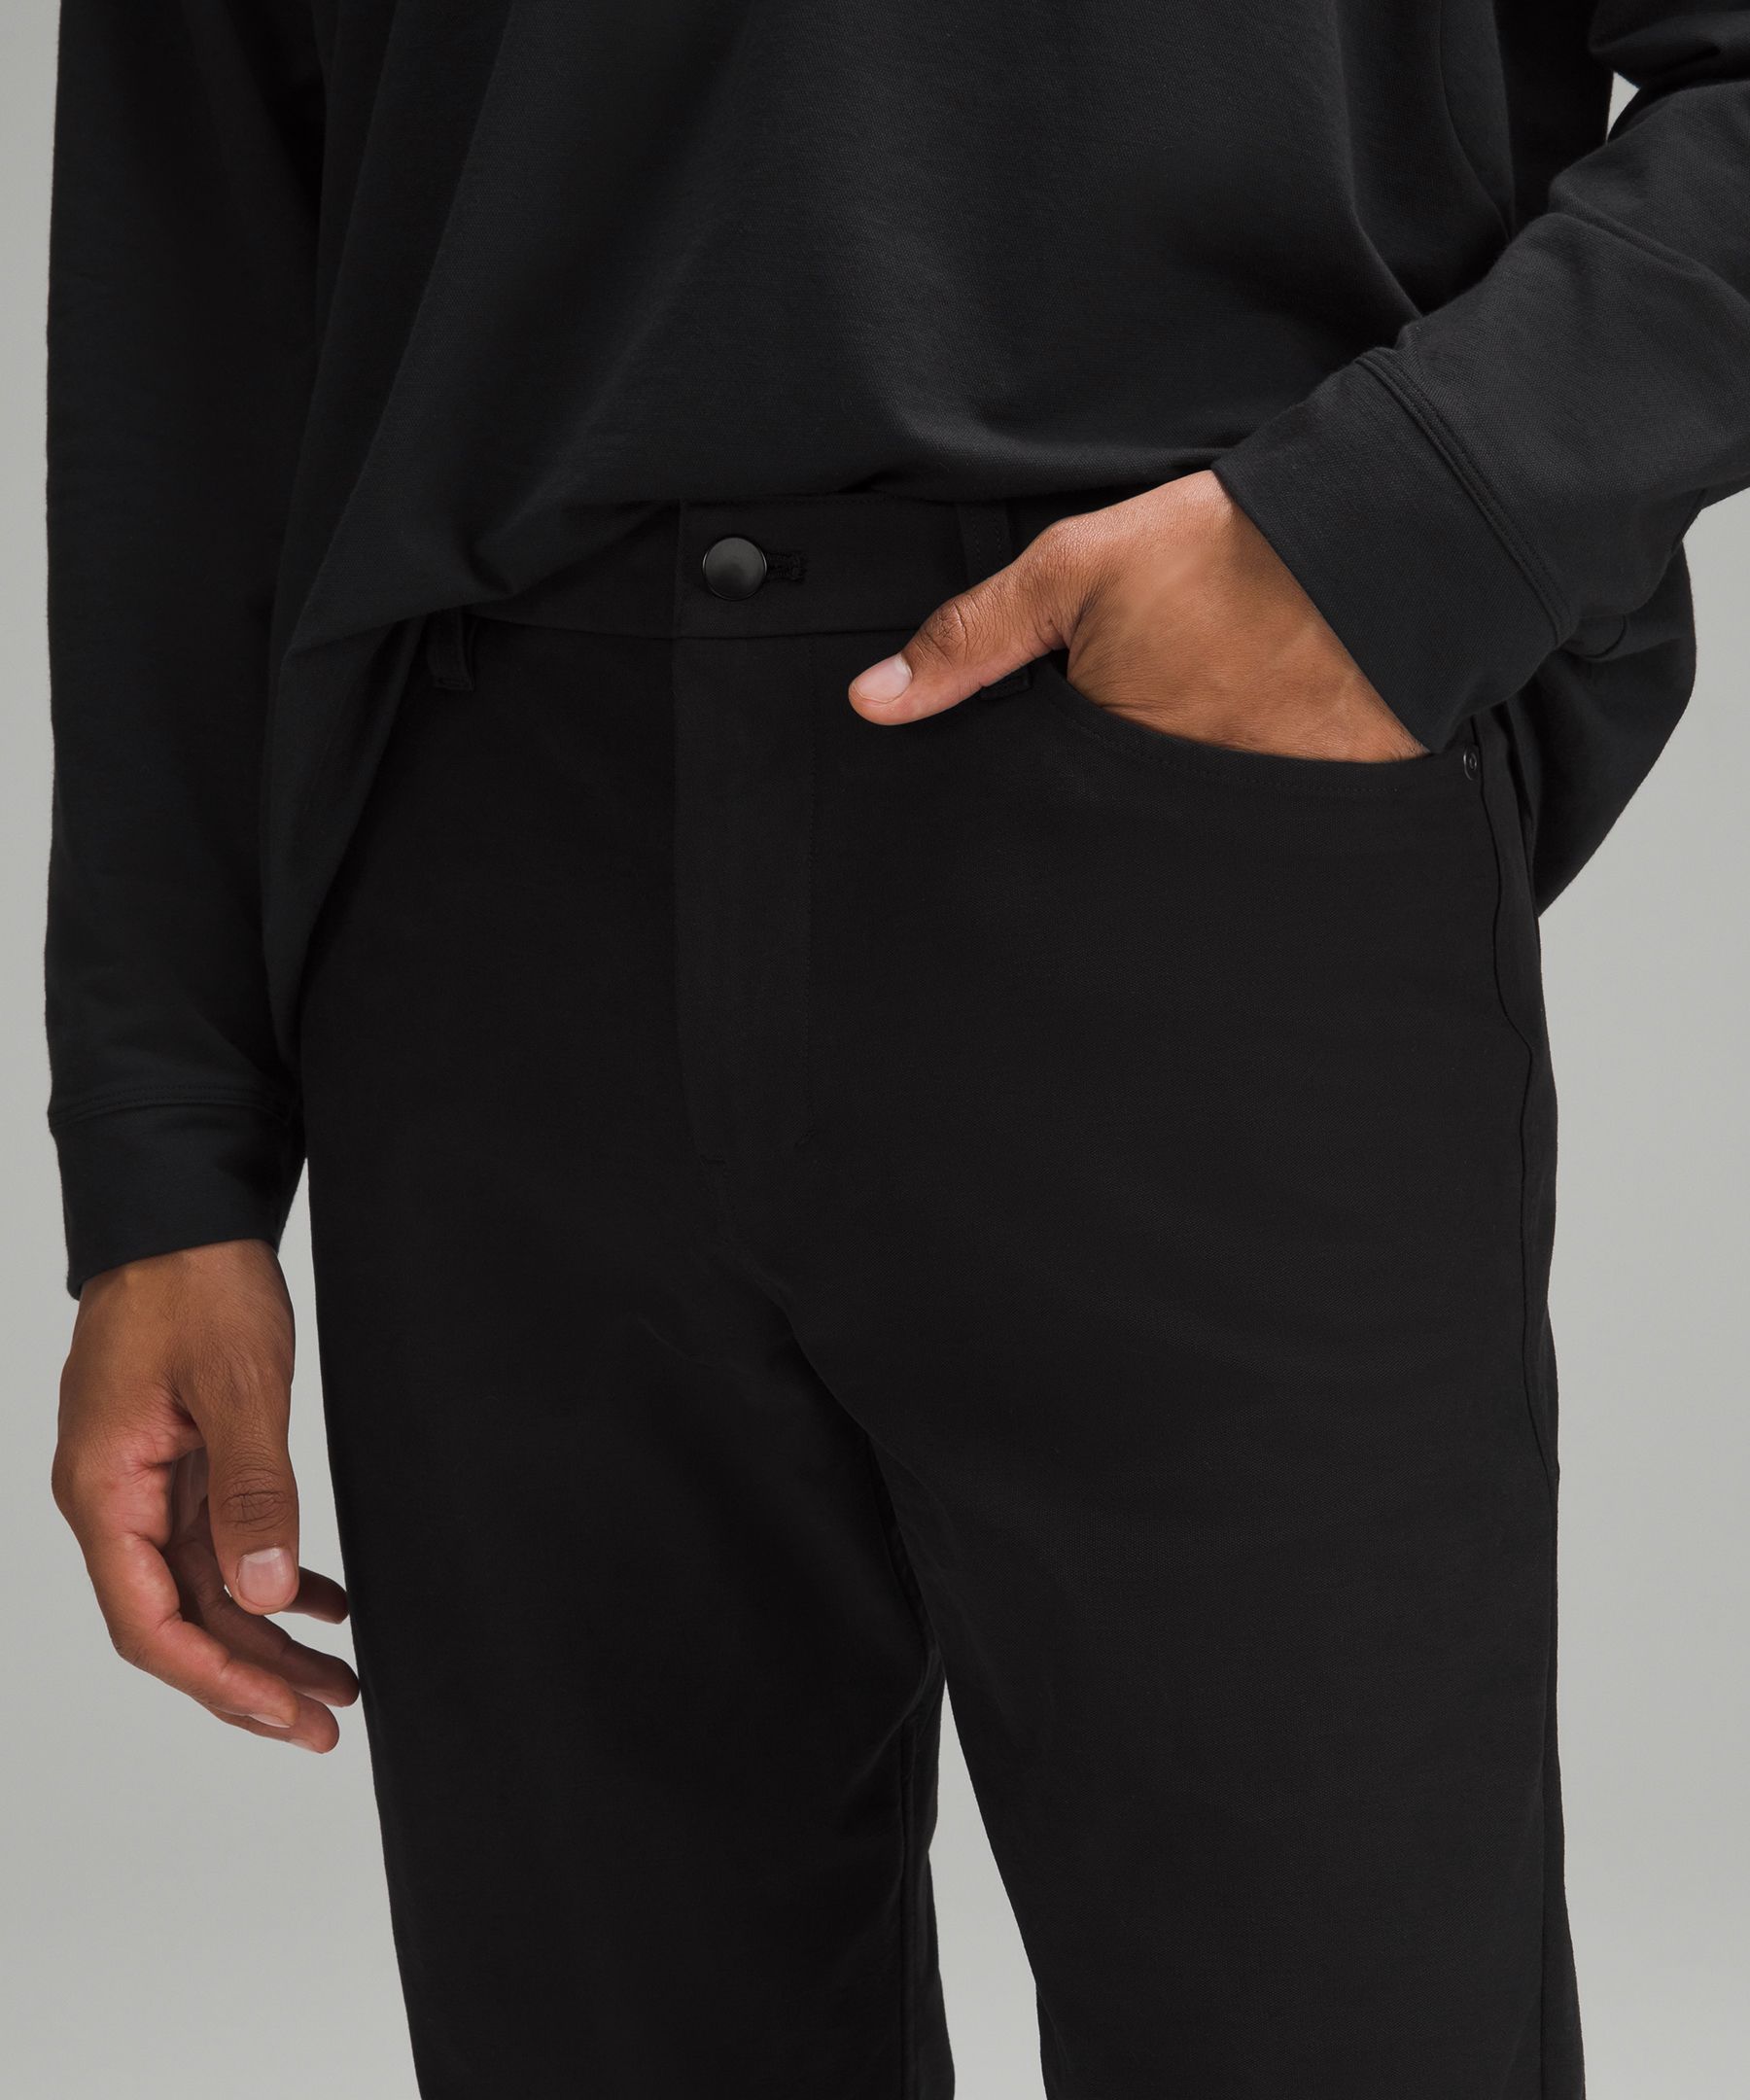 Lululemon ABC Slim fit 5 pocket pants black size 31 - Depop